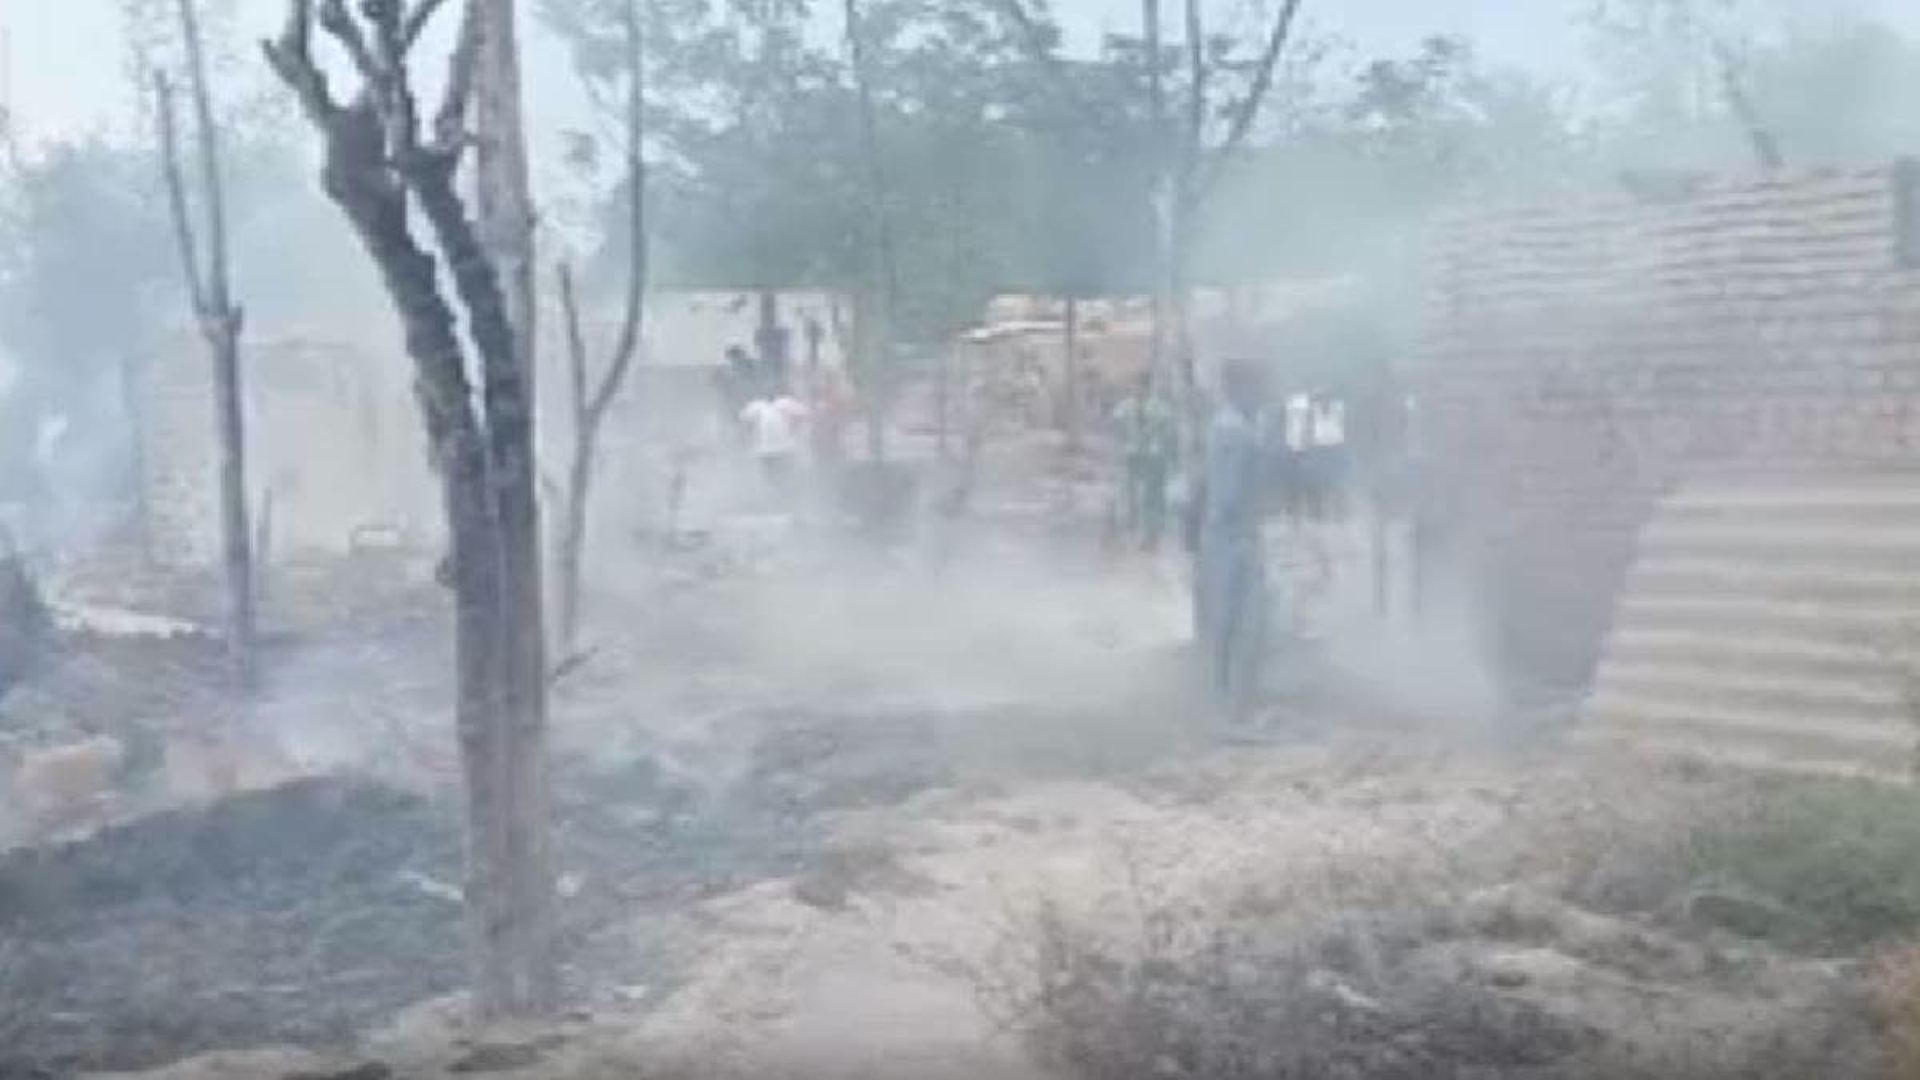 Bathinda slum fire Gas explosion kills 2 kids, injures another